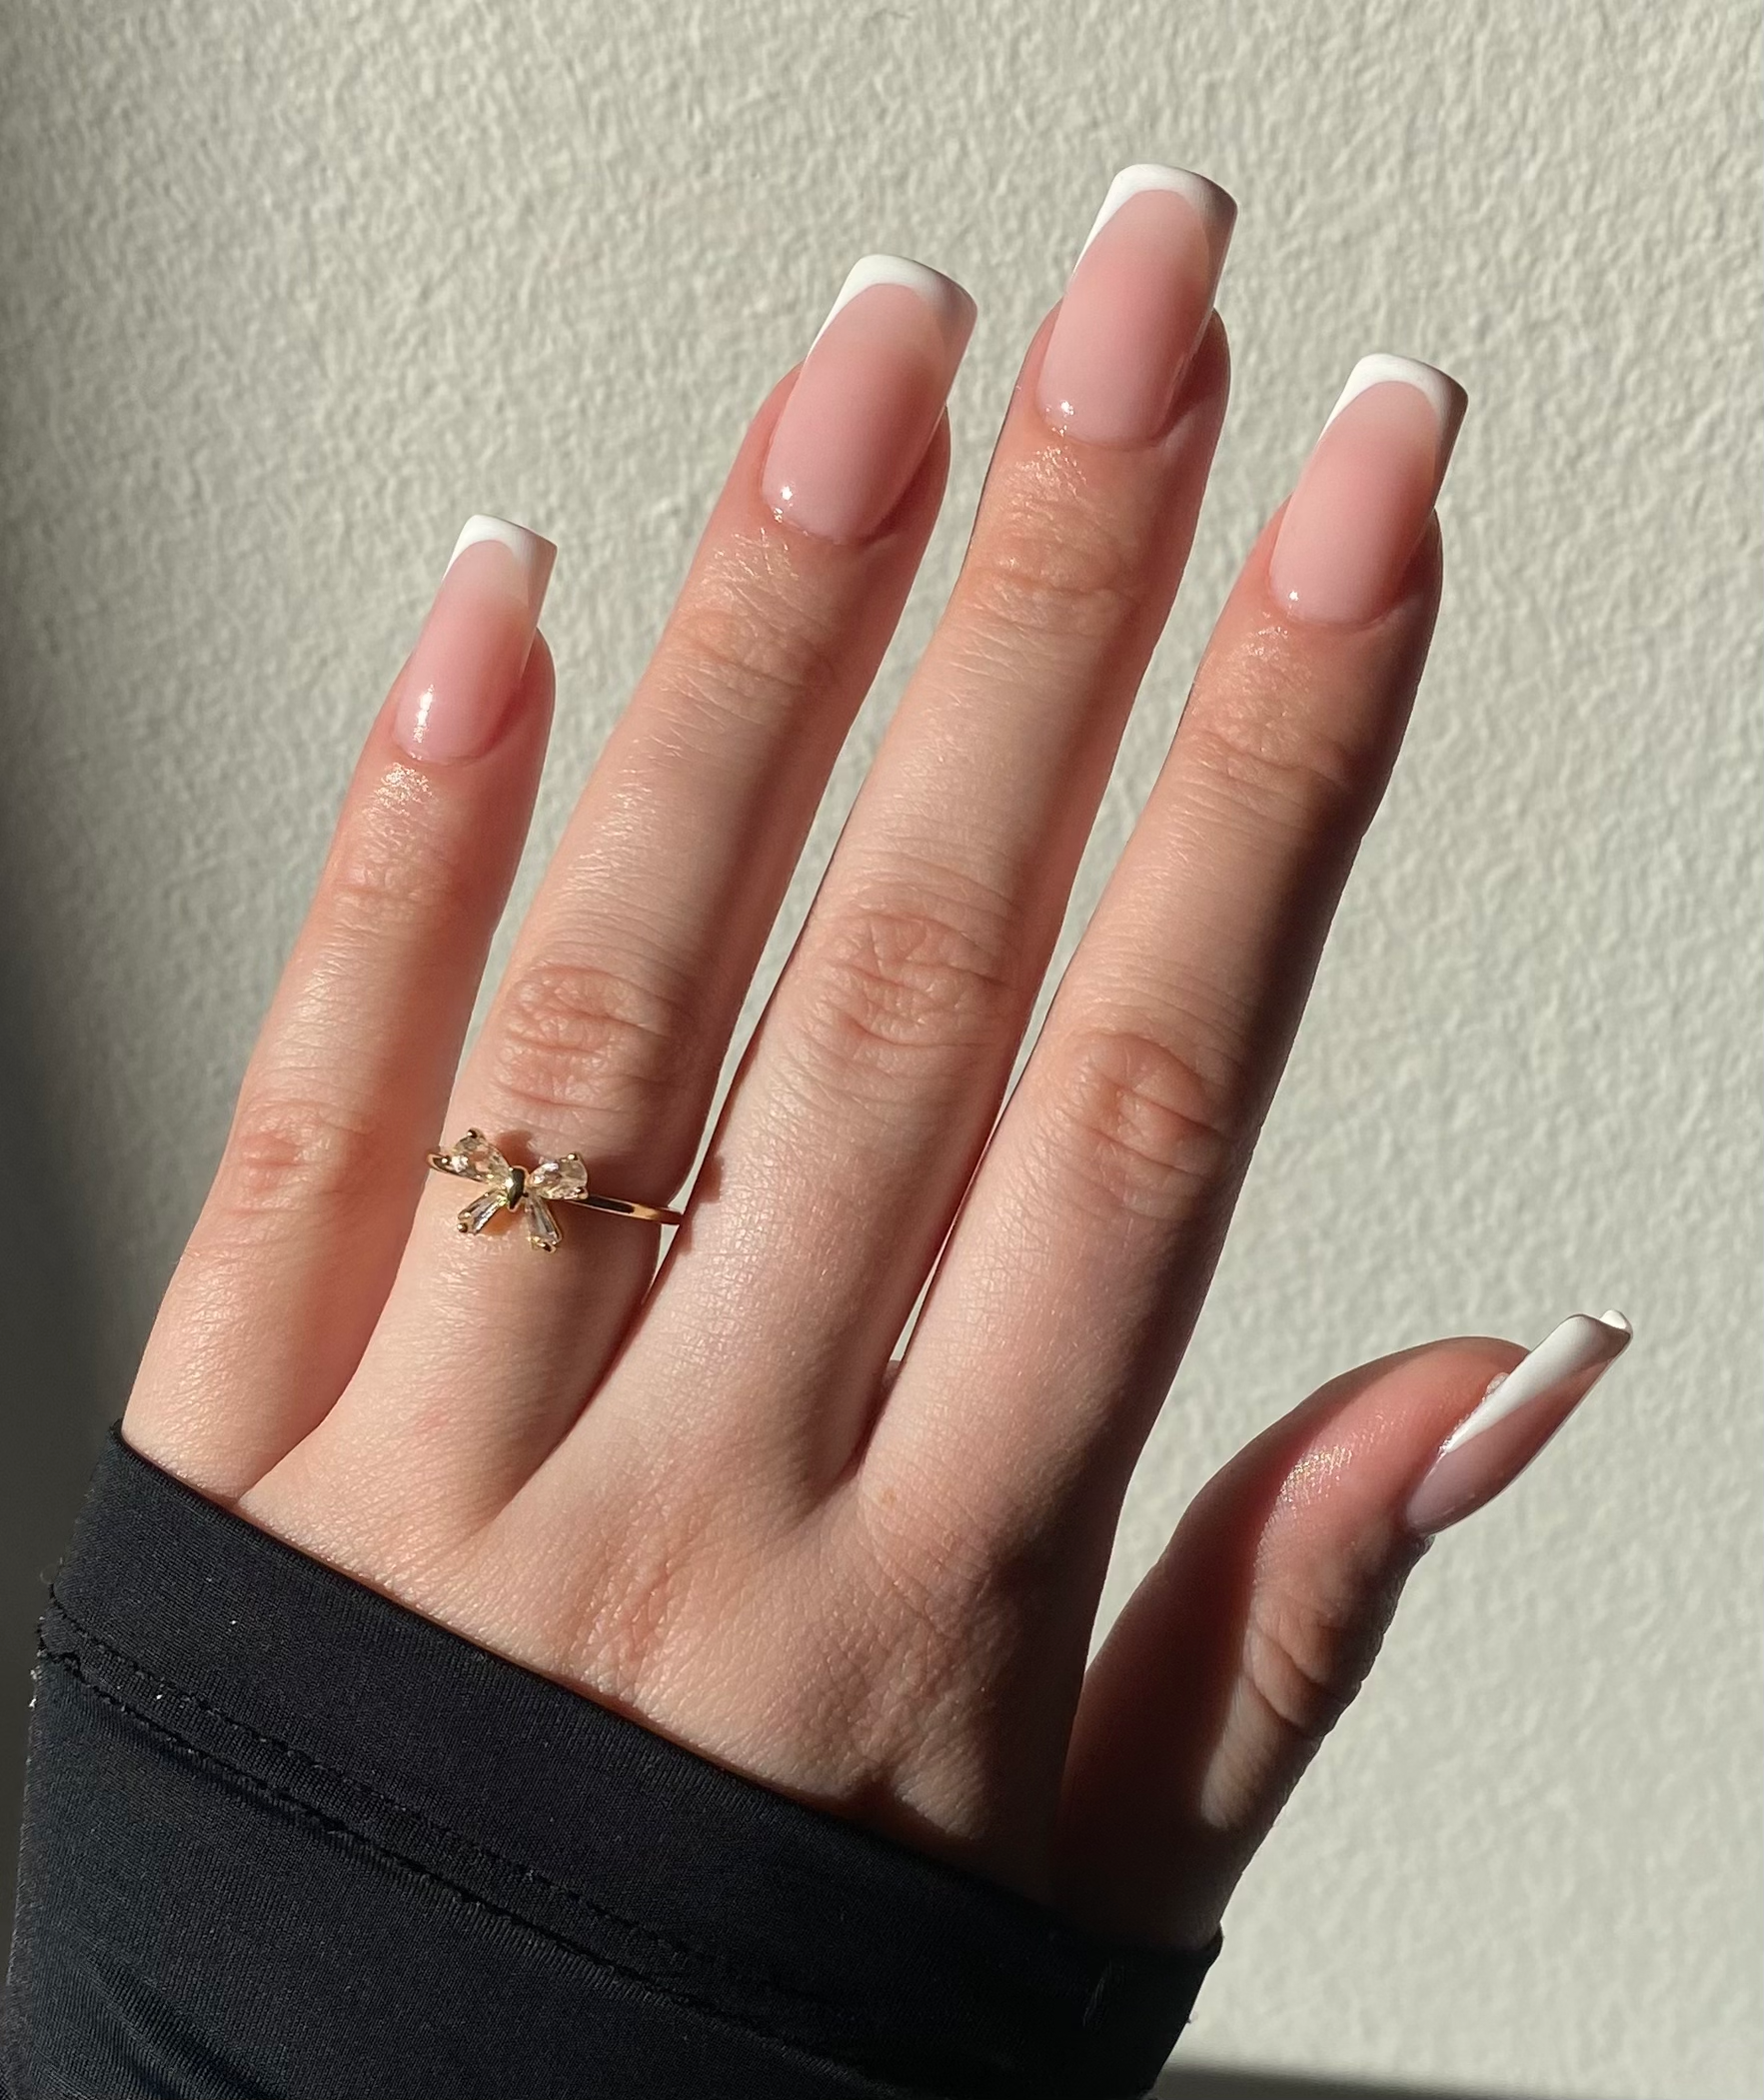 Le Mini Macaron winter nail art trends. 